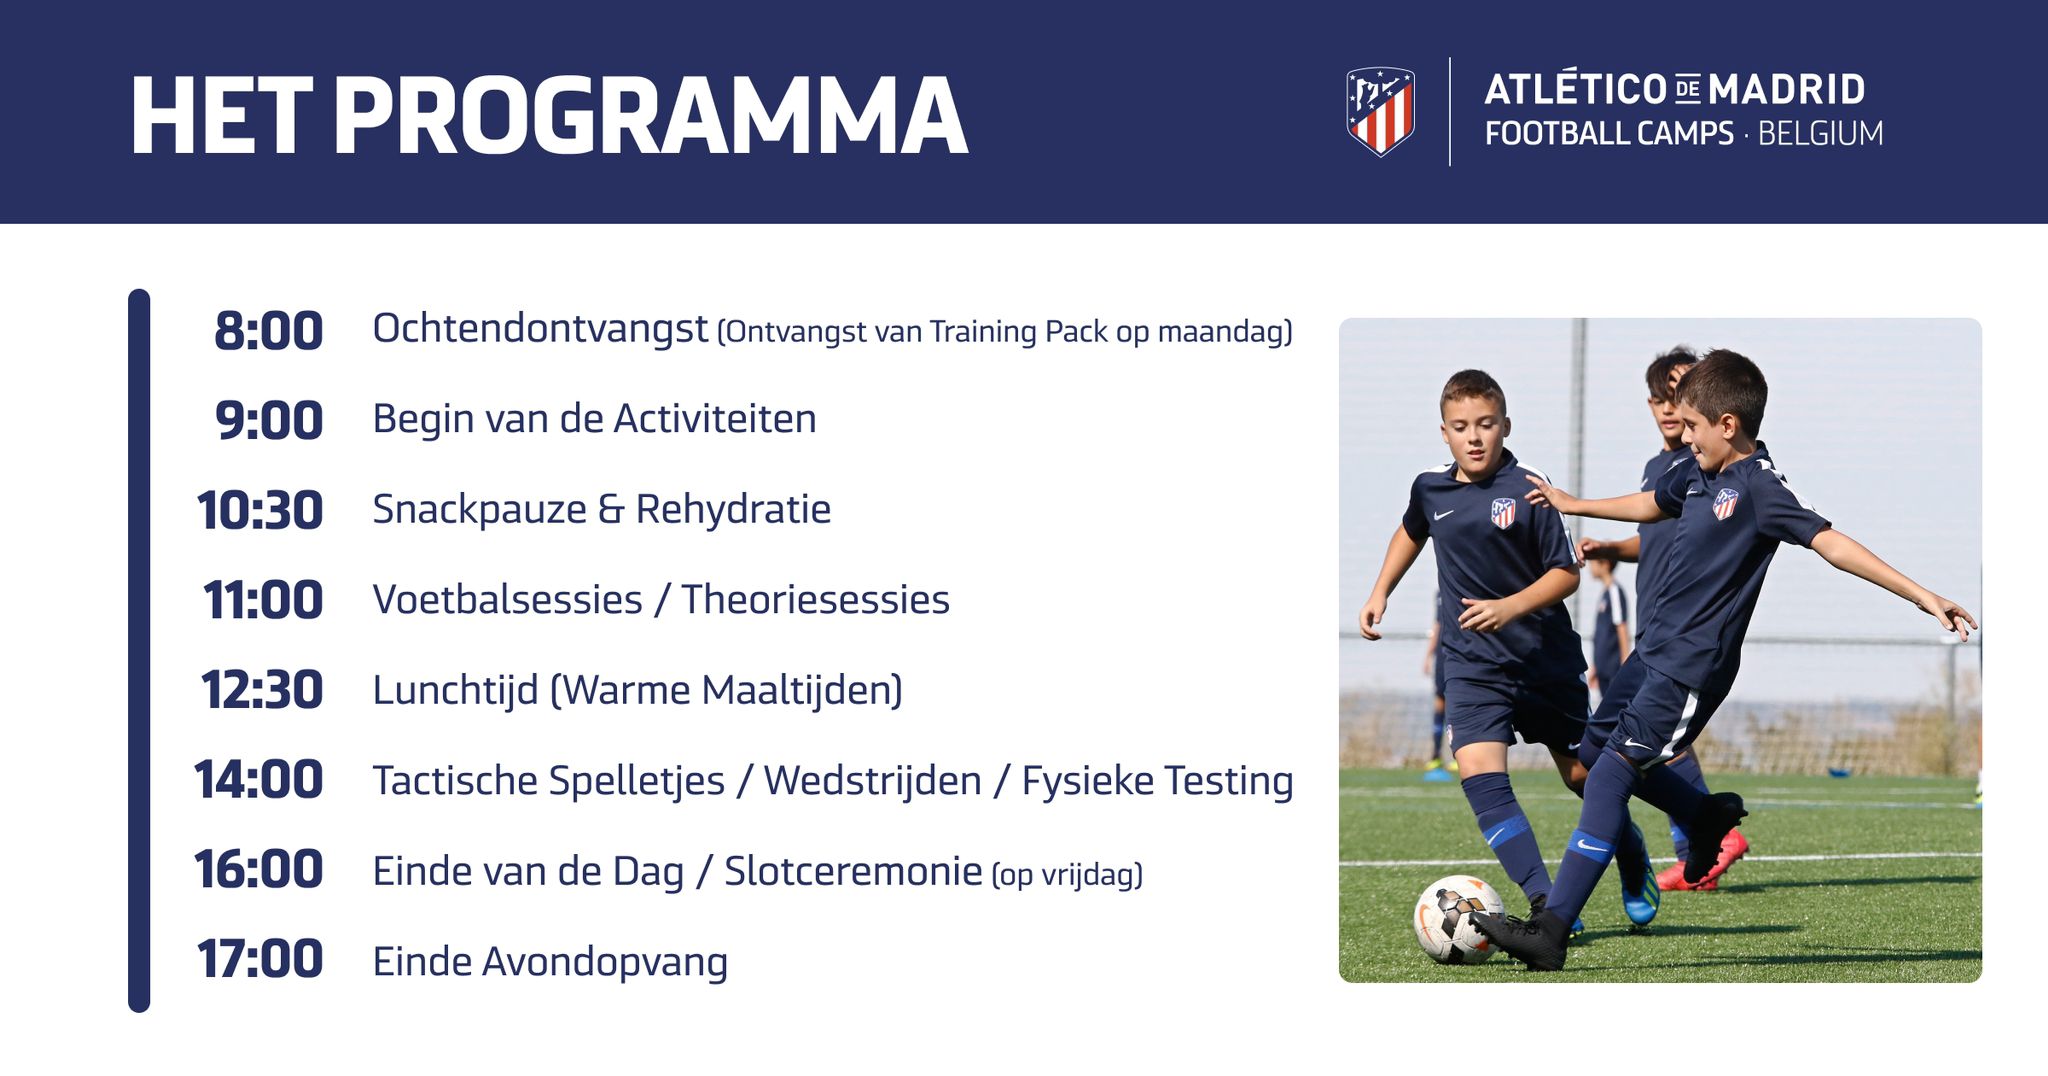 atl-madrid-programme-nl-2023.jpg